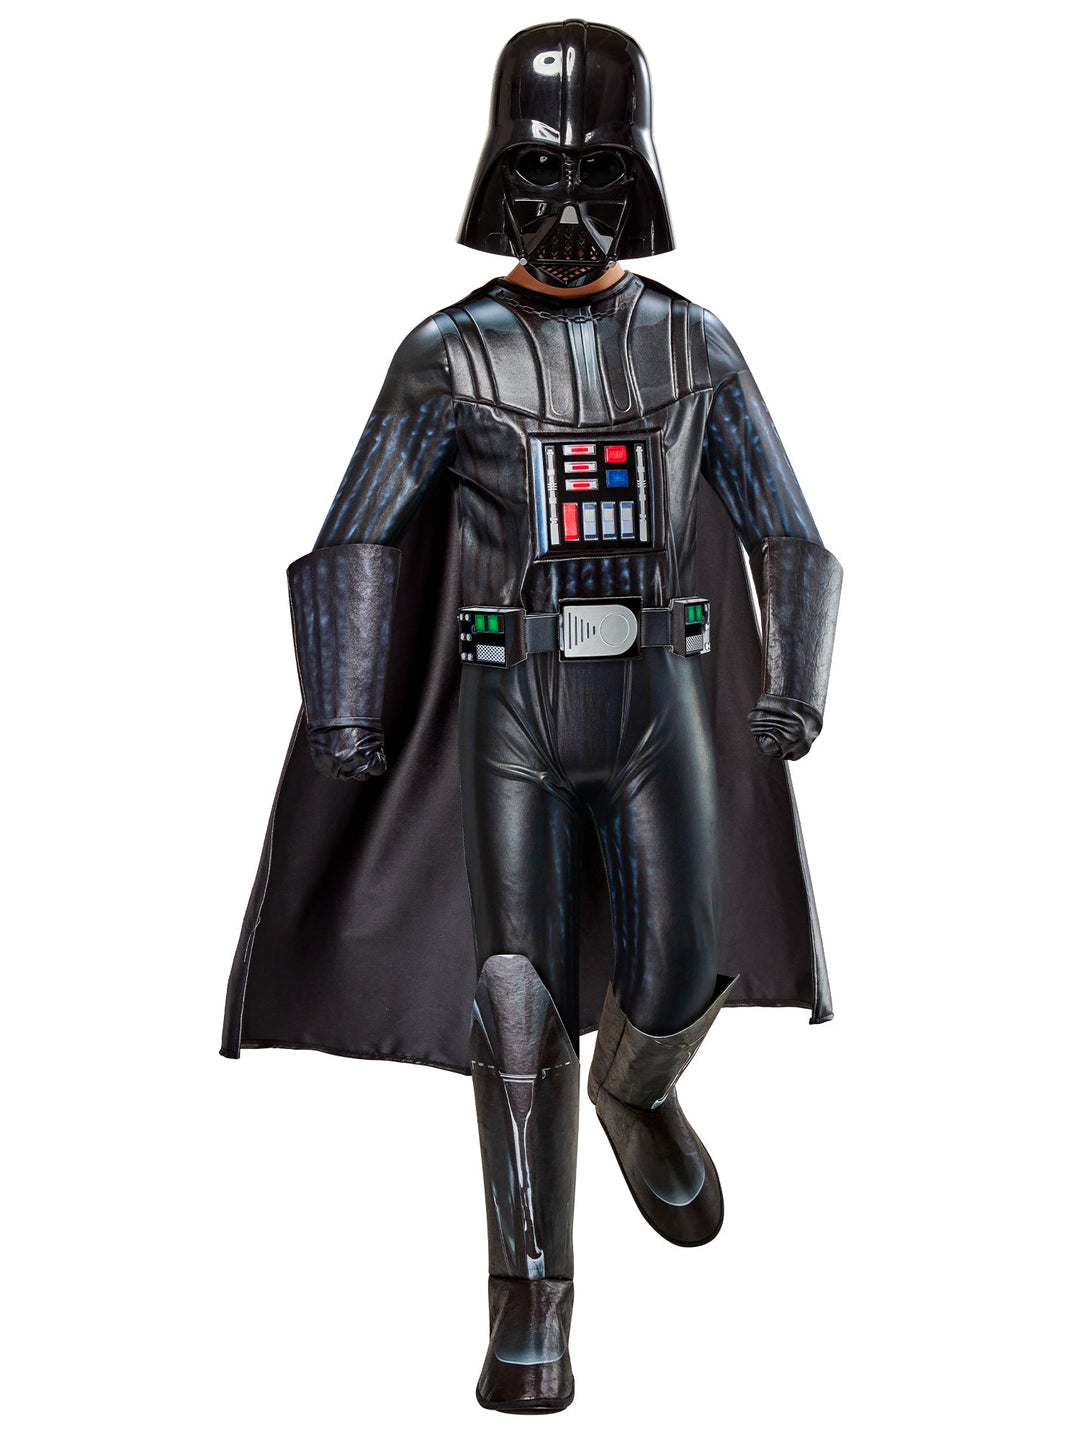 Darth Vader Costume for Kids Premium Sith Suit